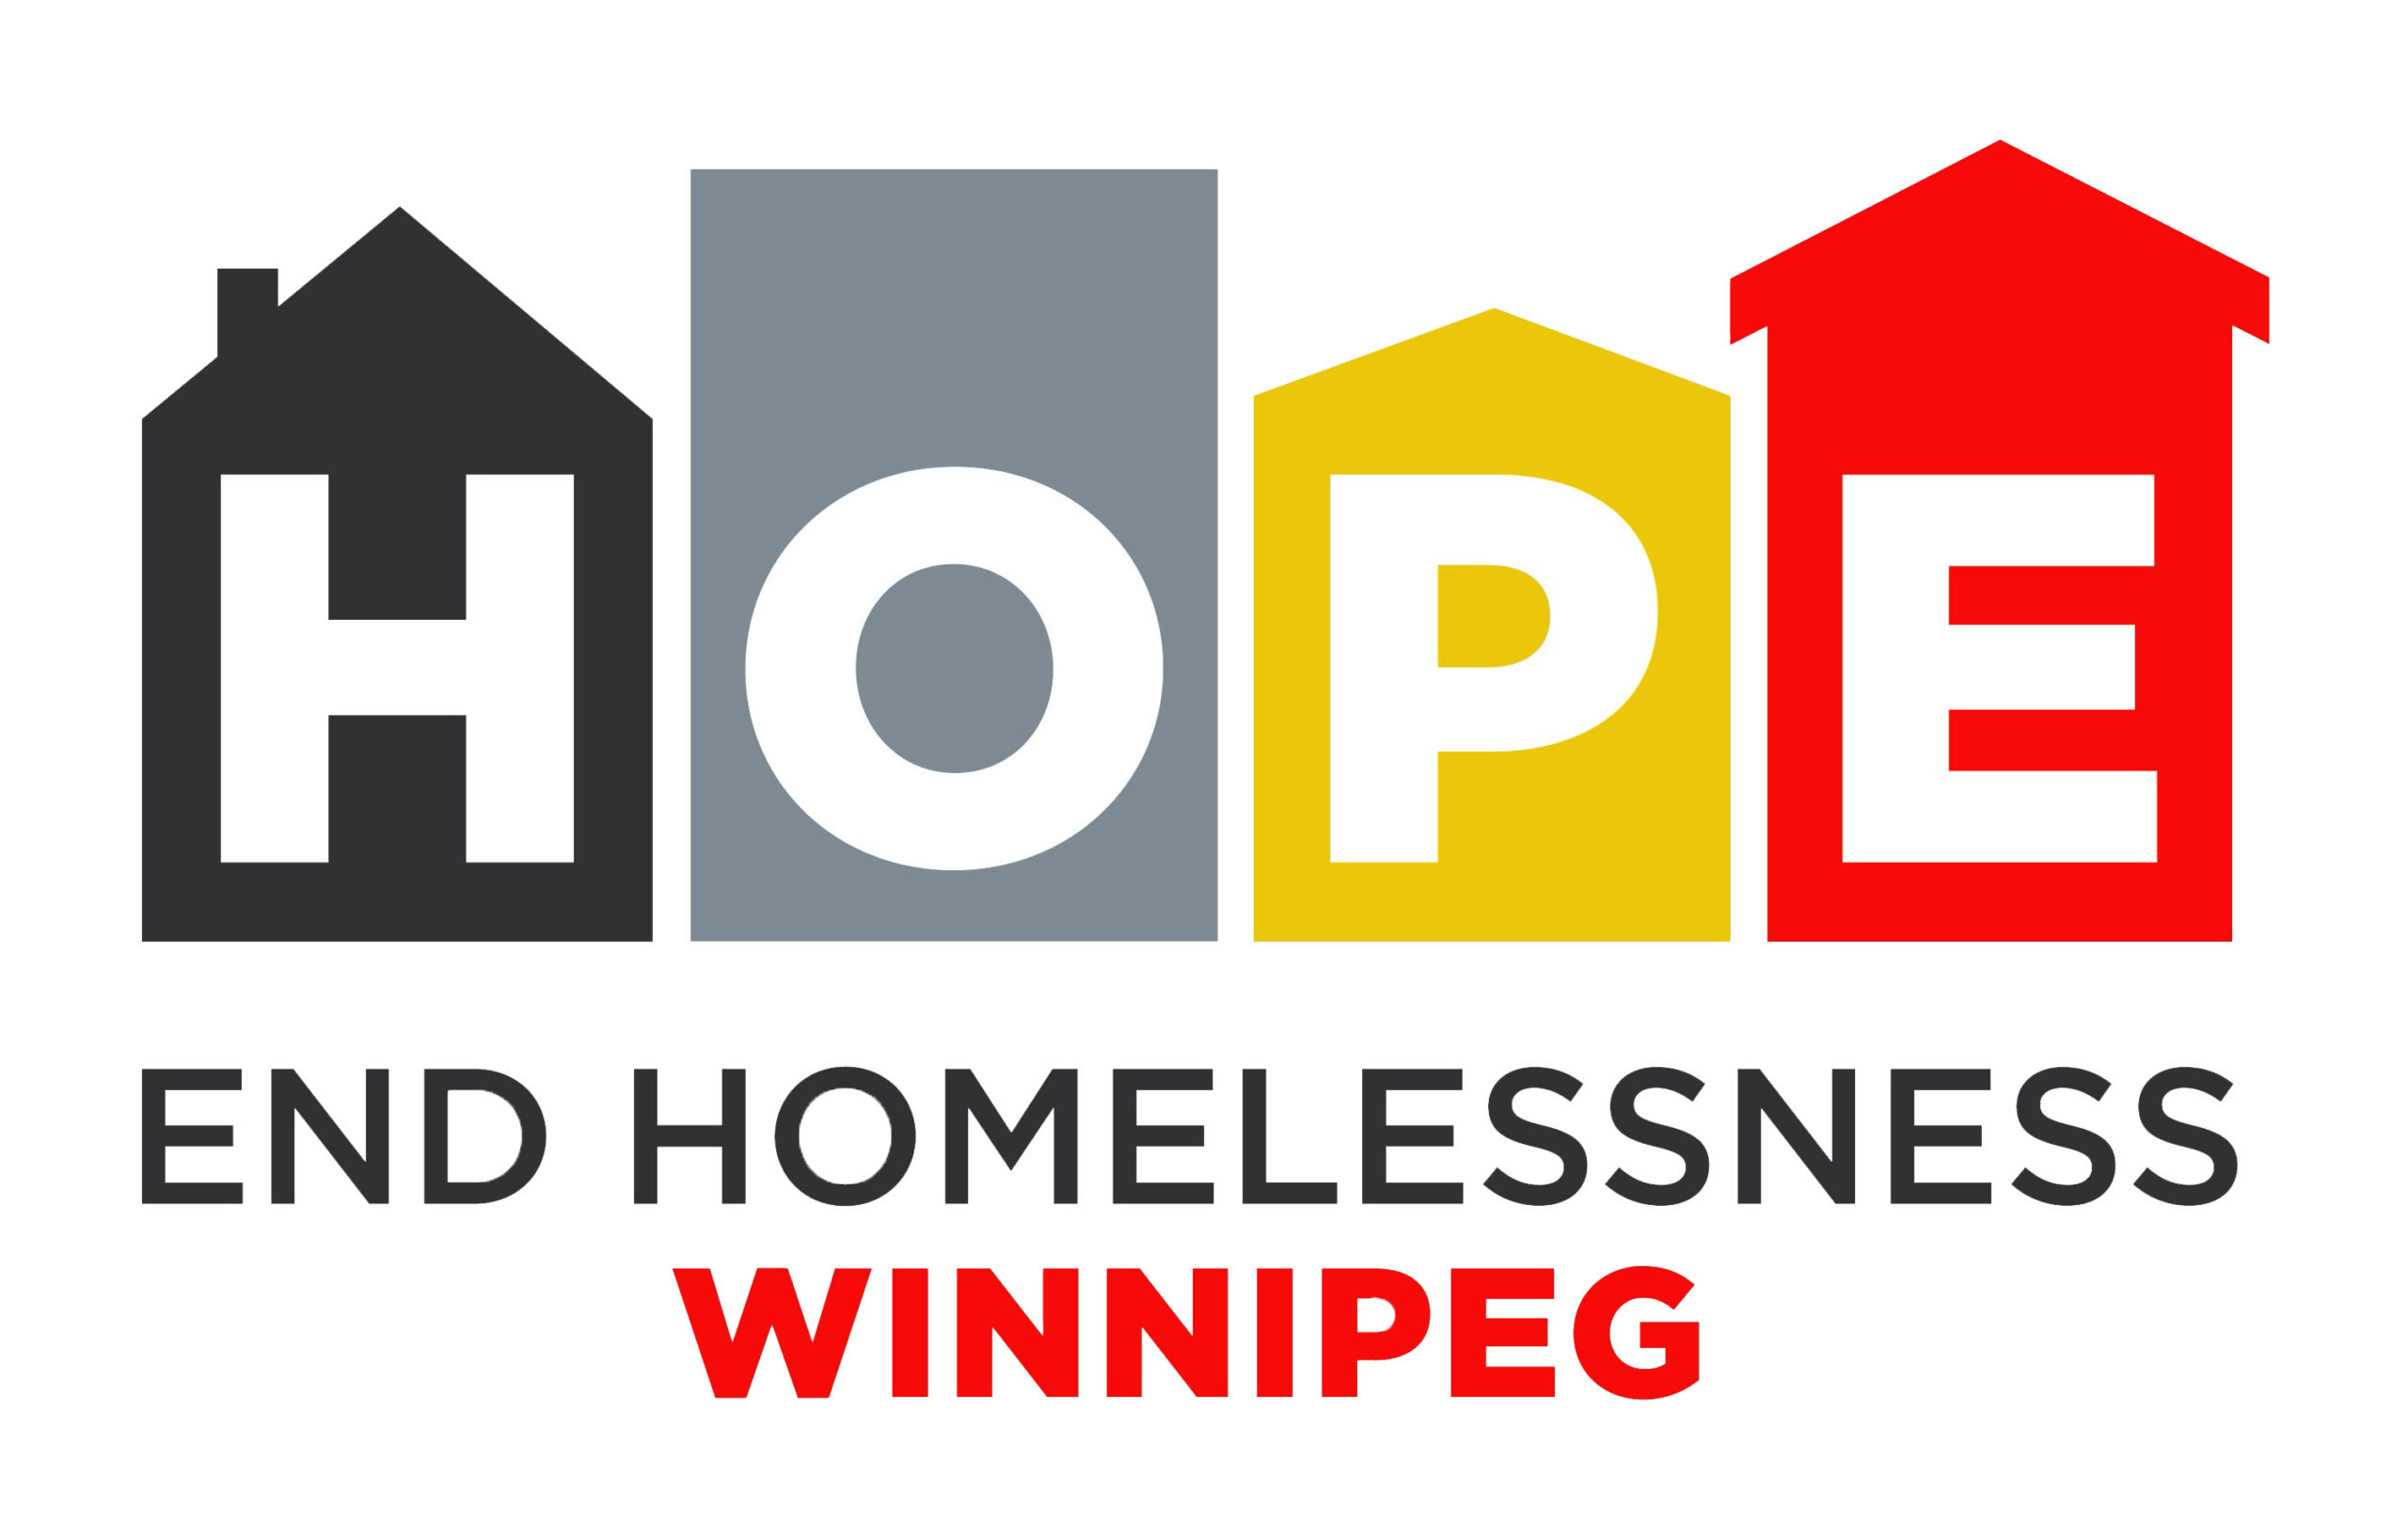 End Homelessness Winnipeg logo